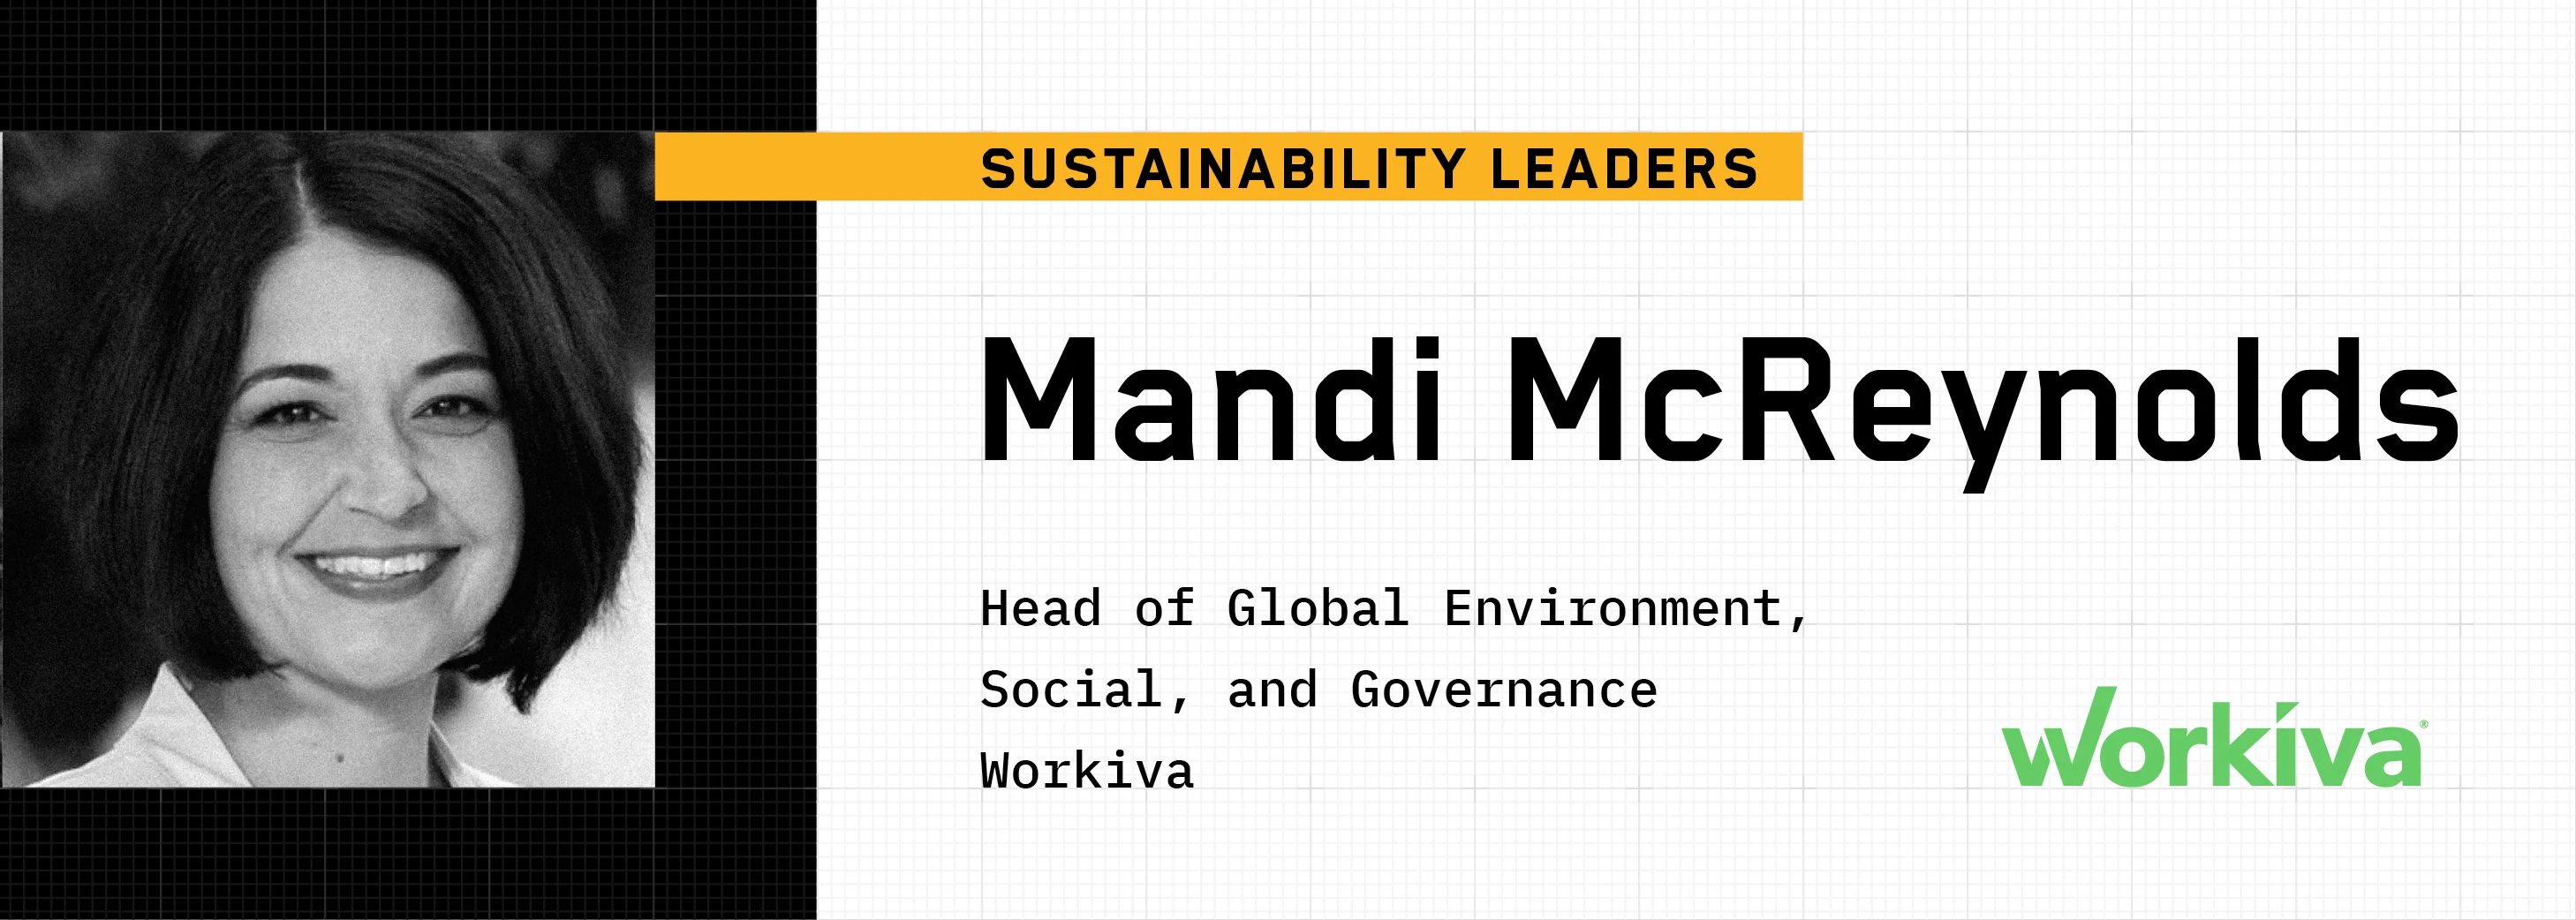 Mandi Mcreynolds, Head of Global Environment, Social, and Governance at Workiva